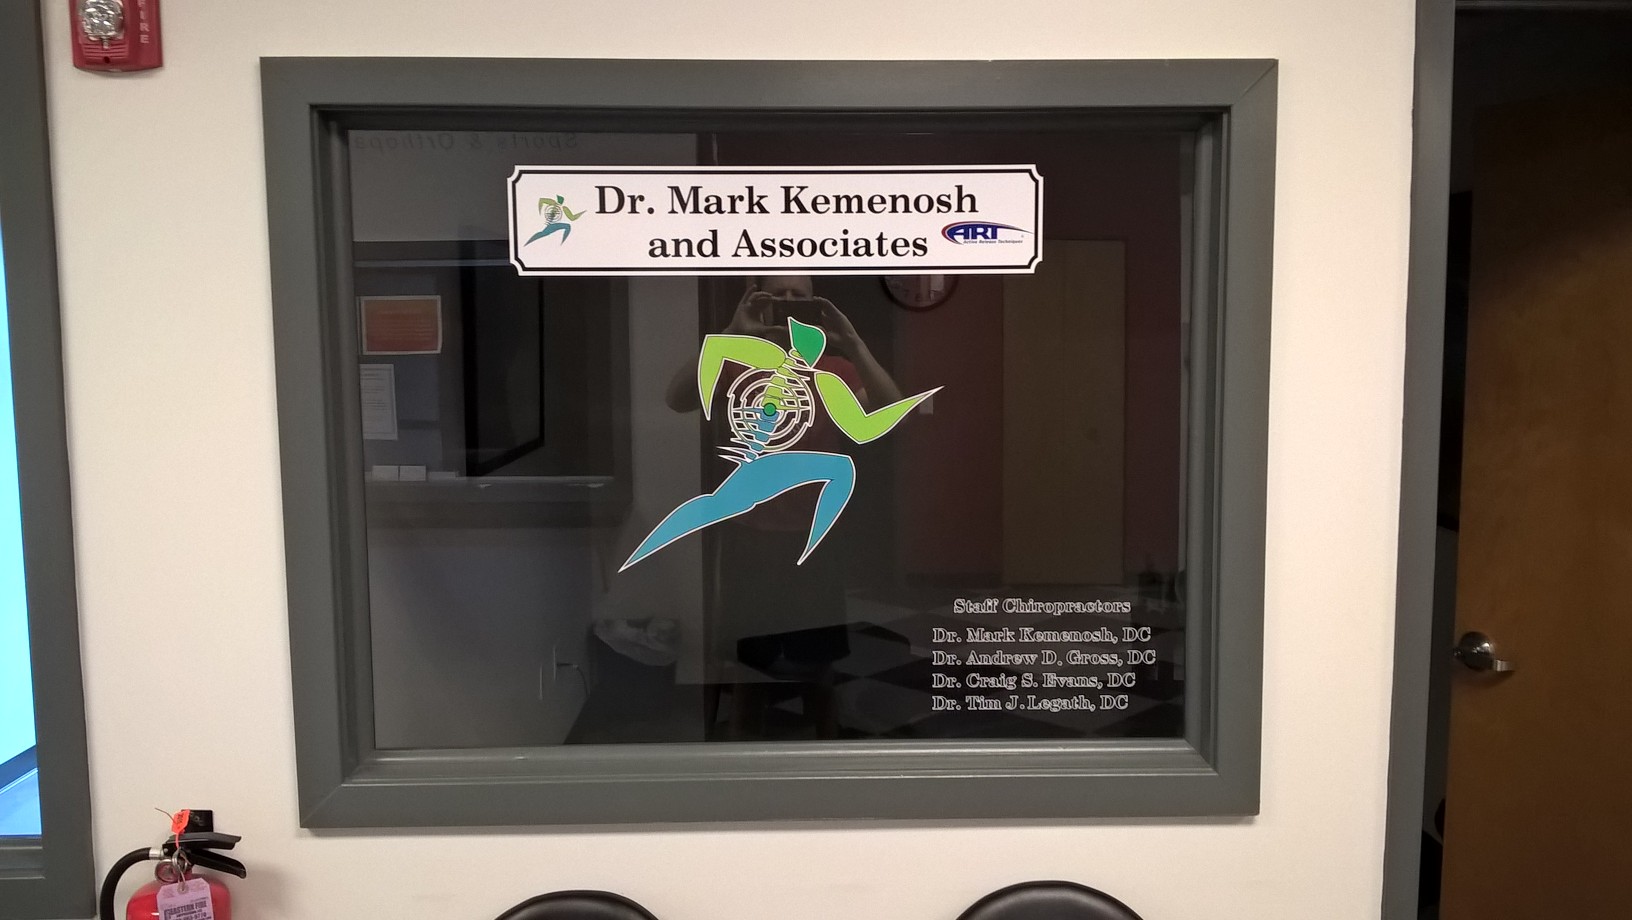 Dr. Mark Kemenosh and Associates